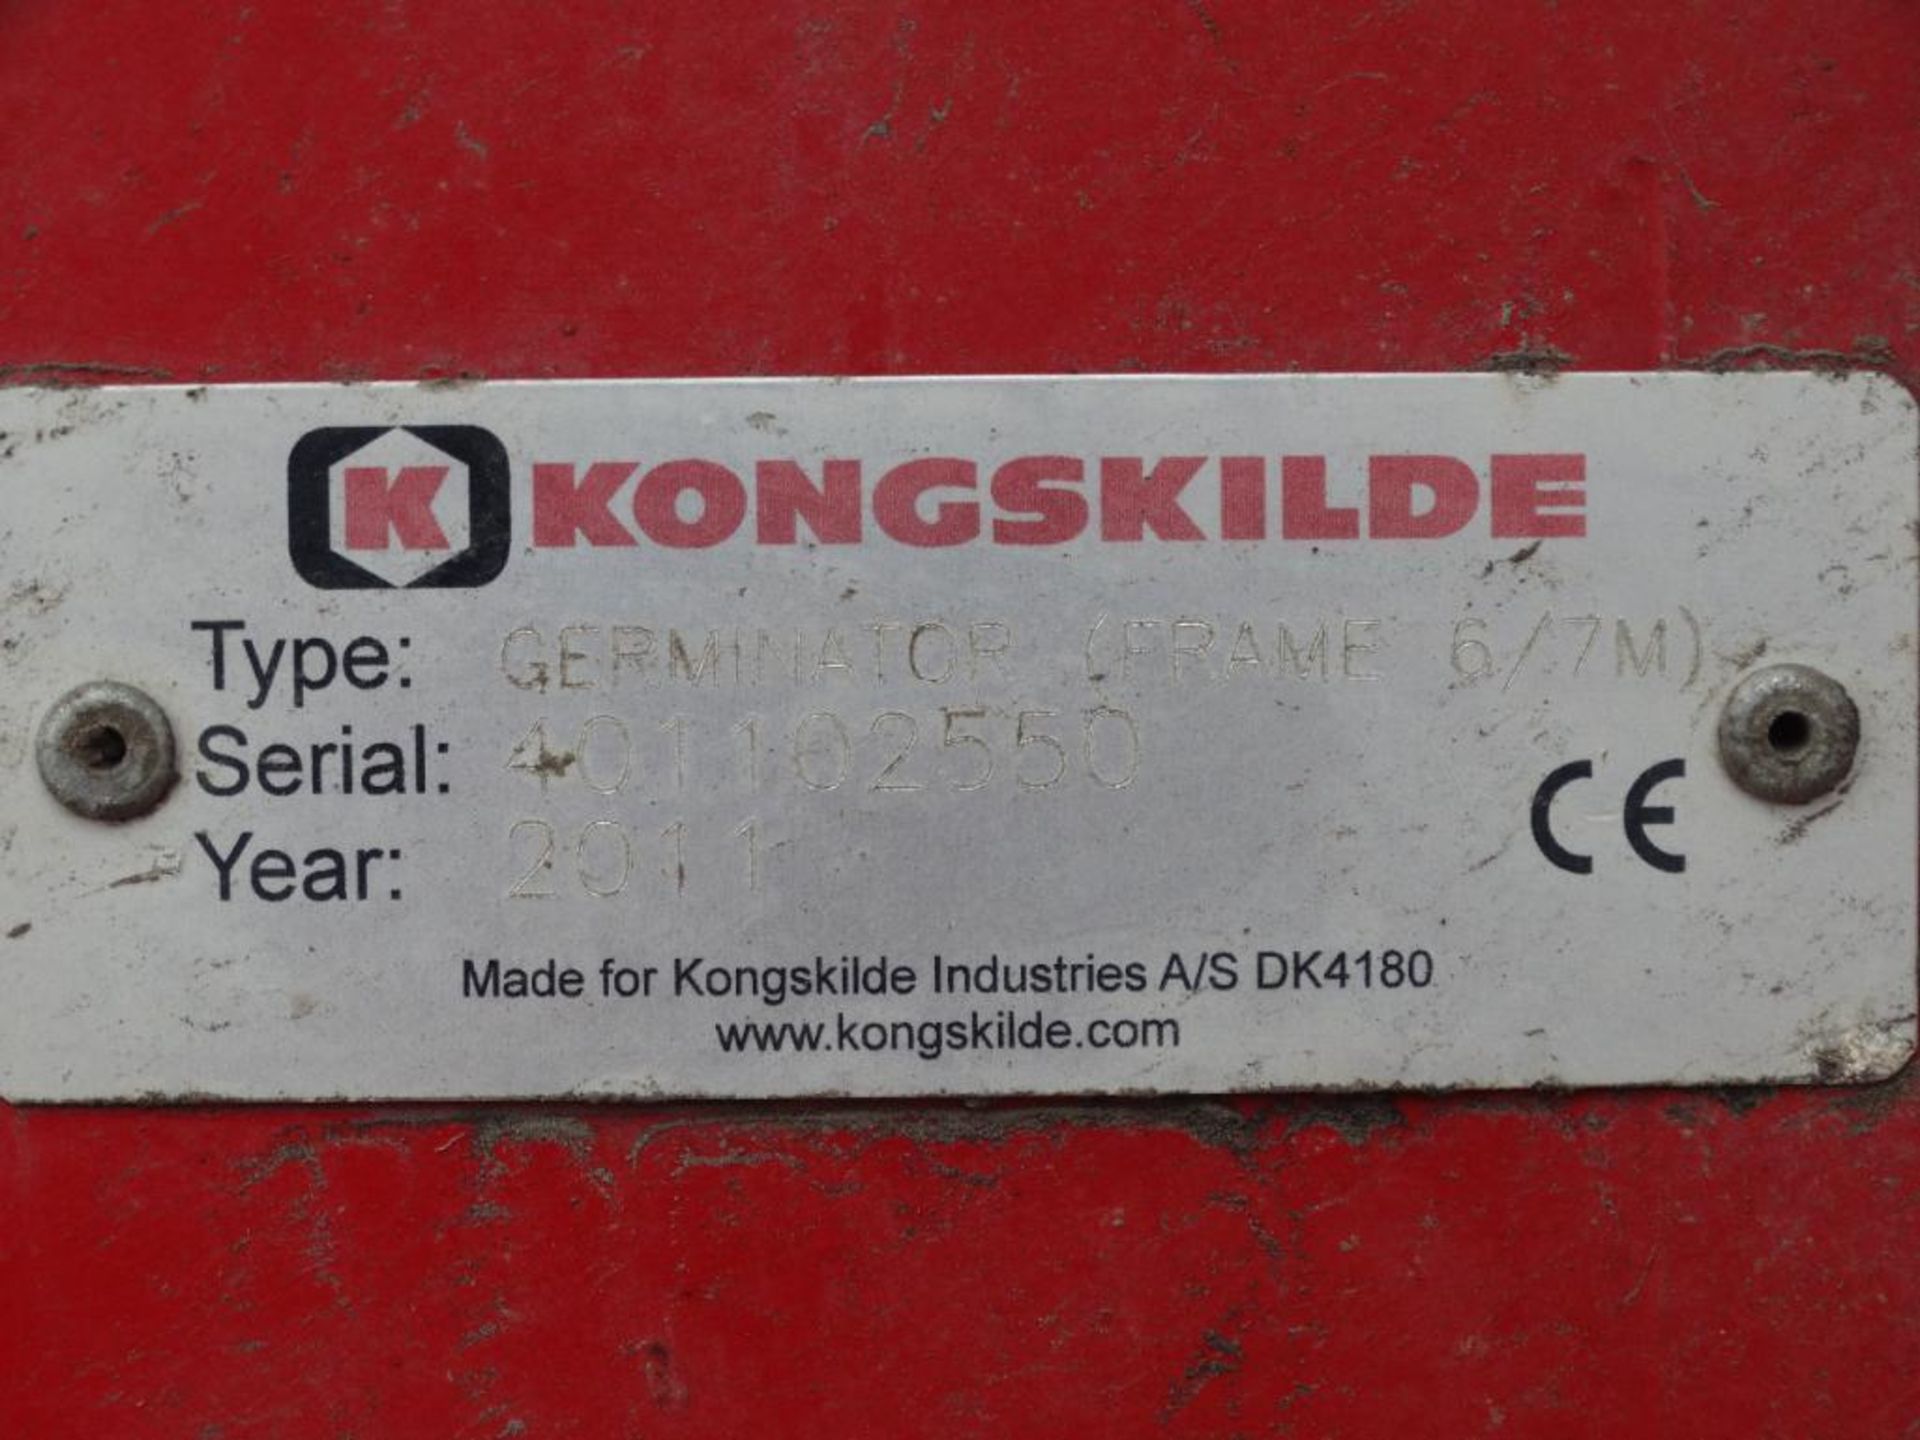 2011 Kongskilde Germinator 6m hydraulic folding trailed cultivator. Serial No: 401102550 - Image 7 of 11